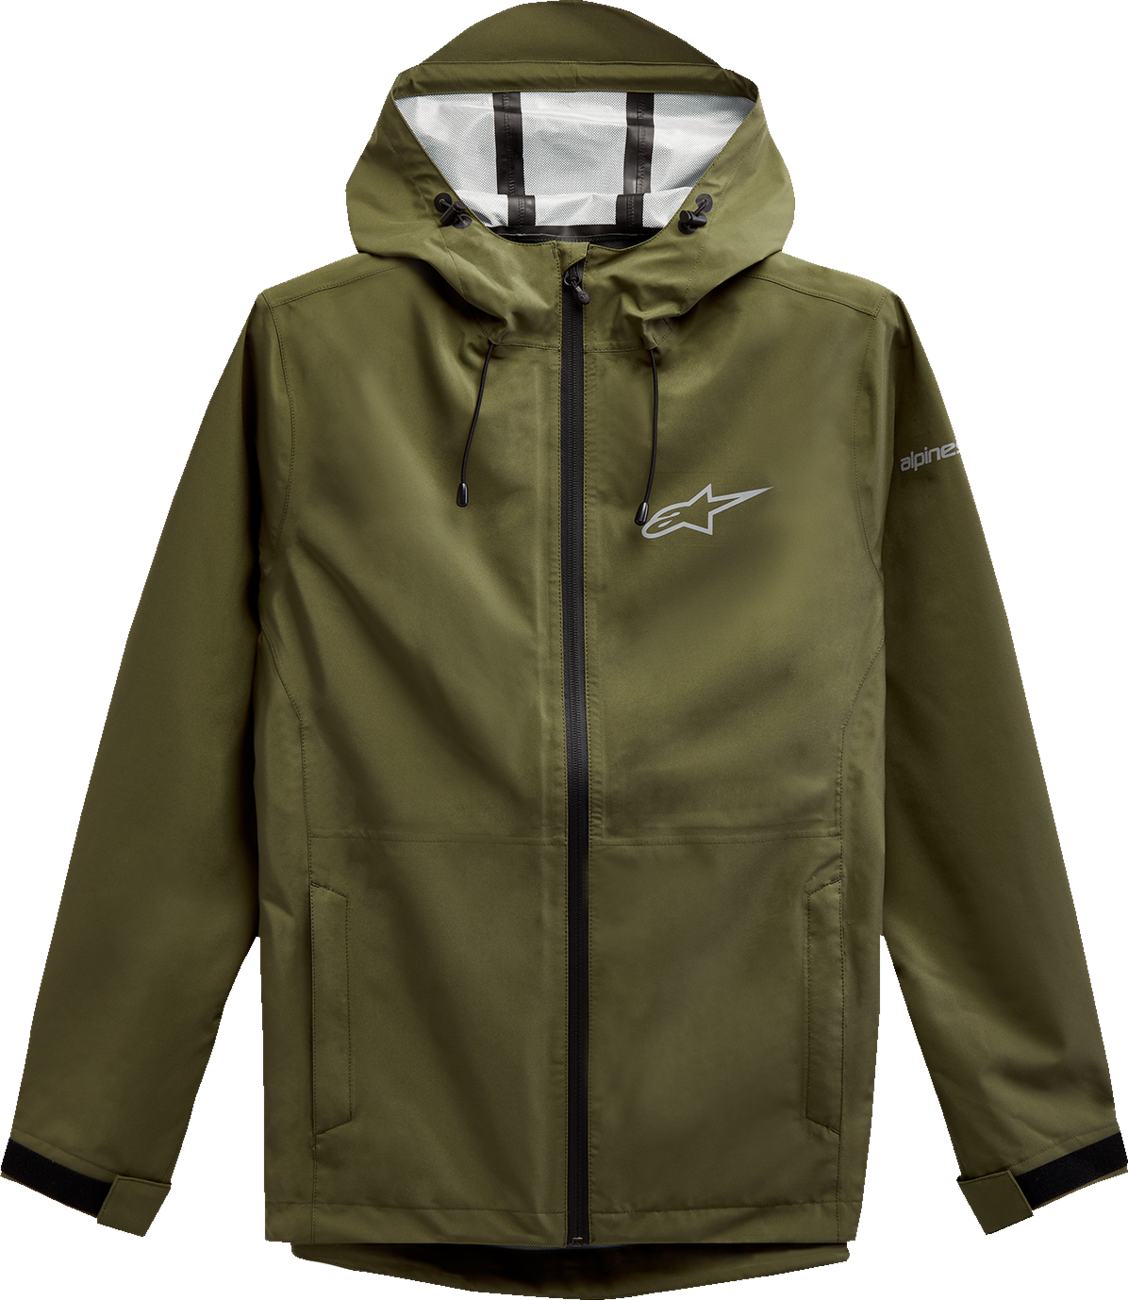 ALPINESTARS Omni Rain Jacket - Military Green - Medium 123211010690M